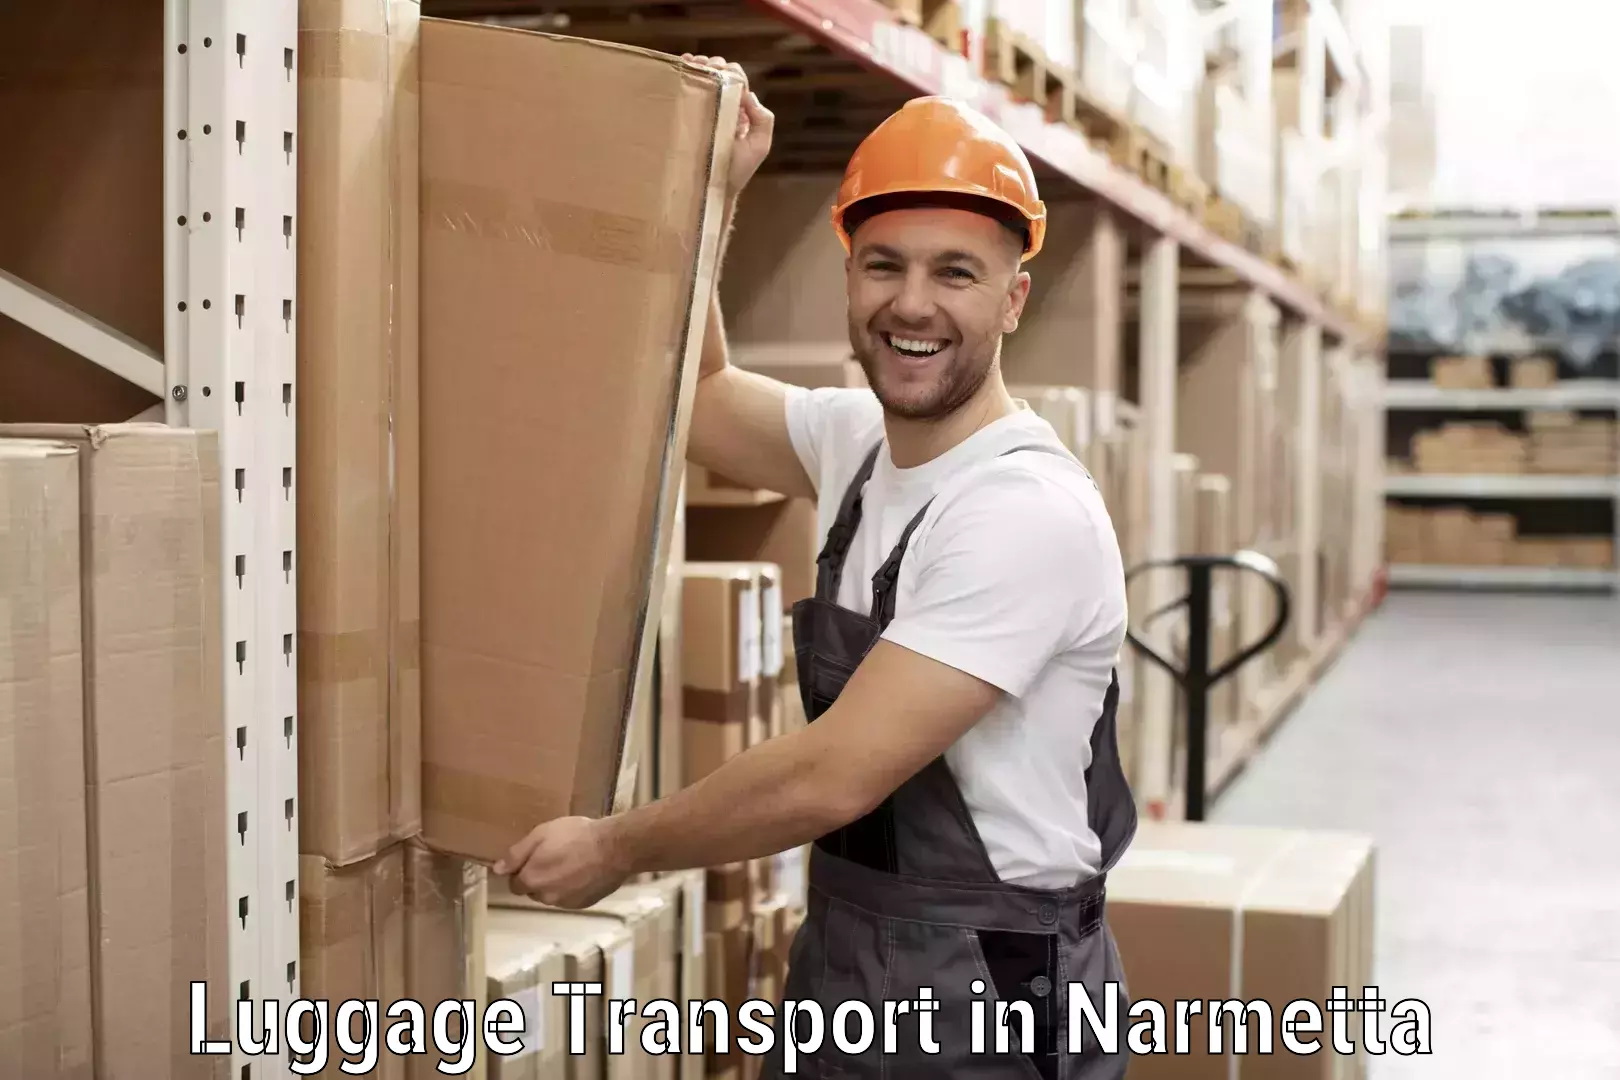 Luggage dispatch service in Narmetta